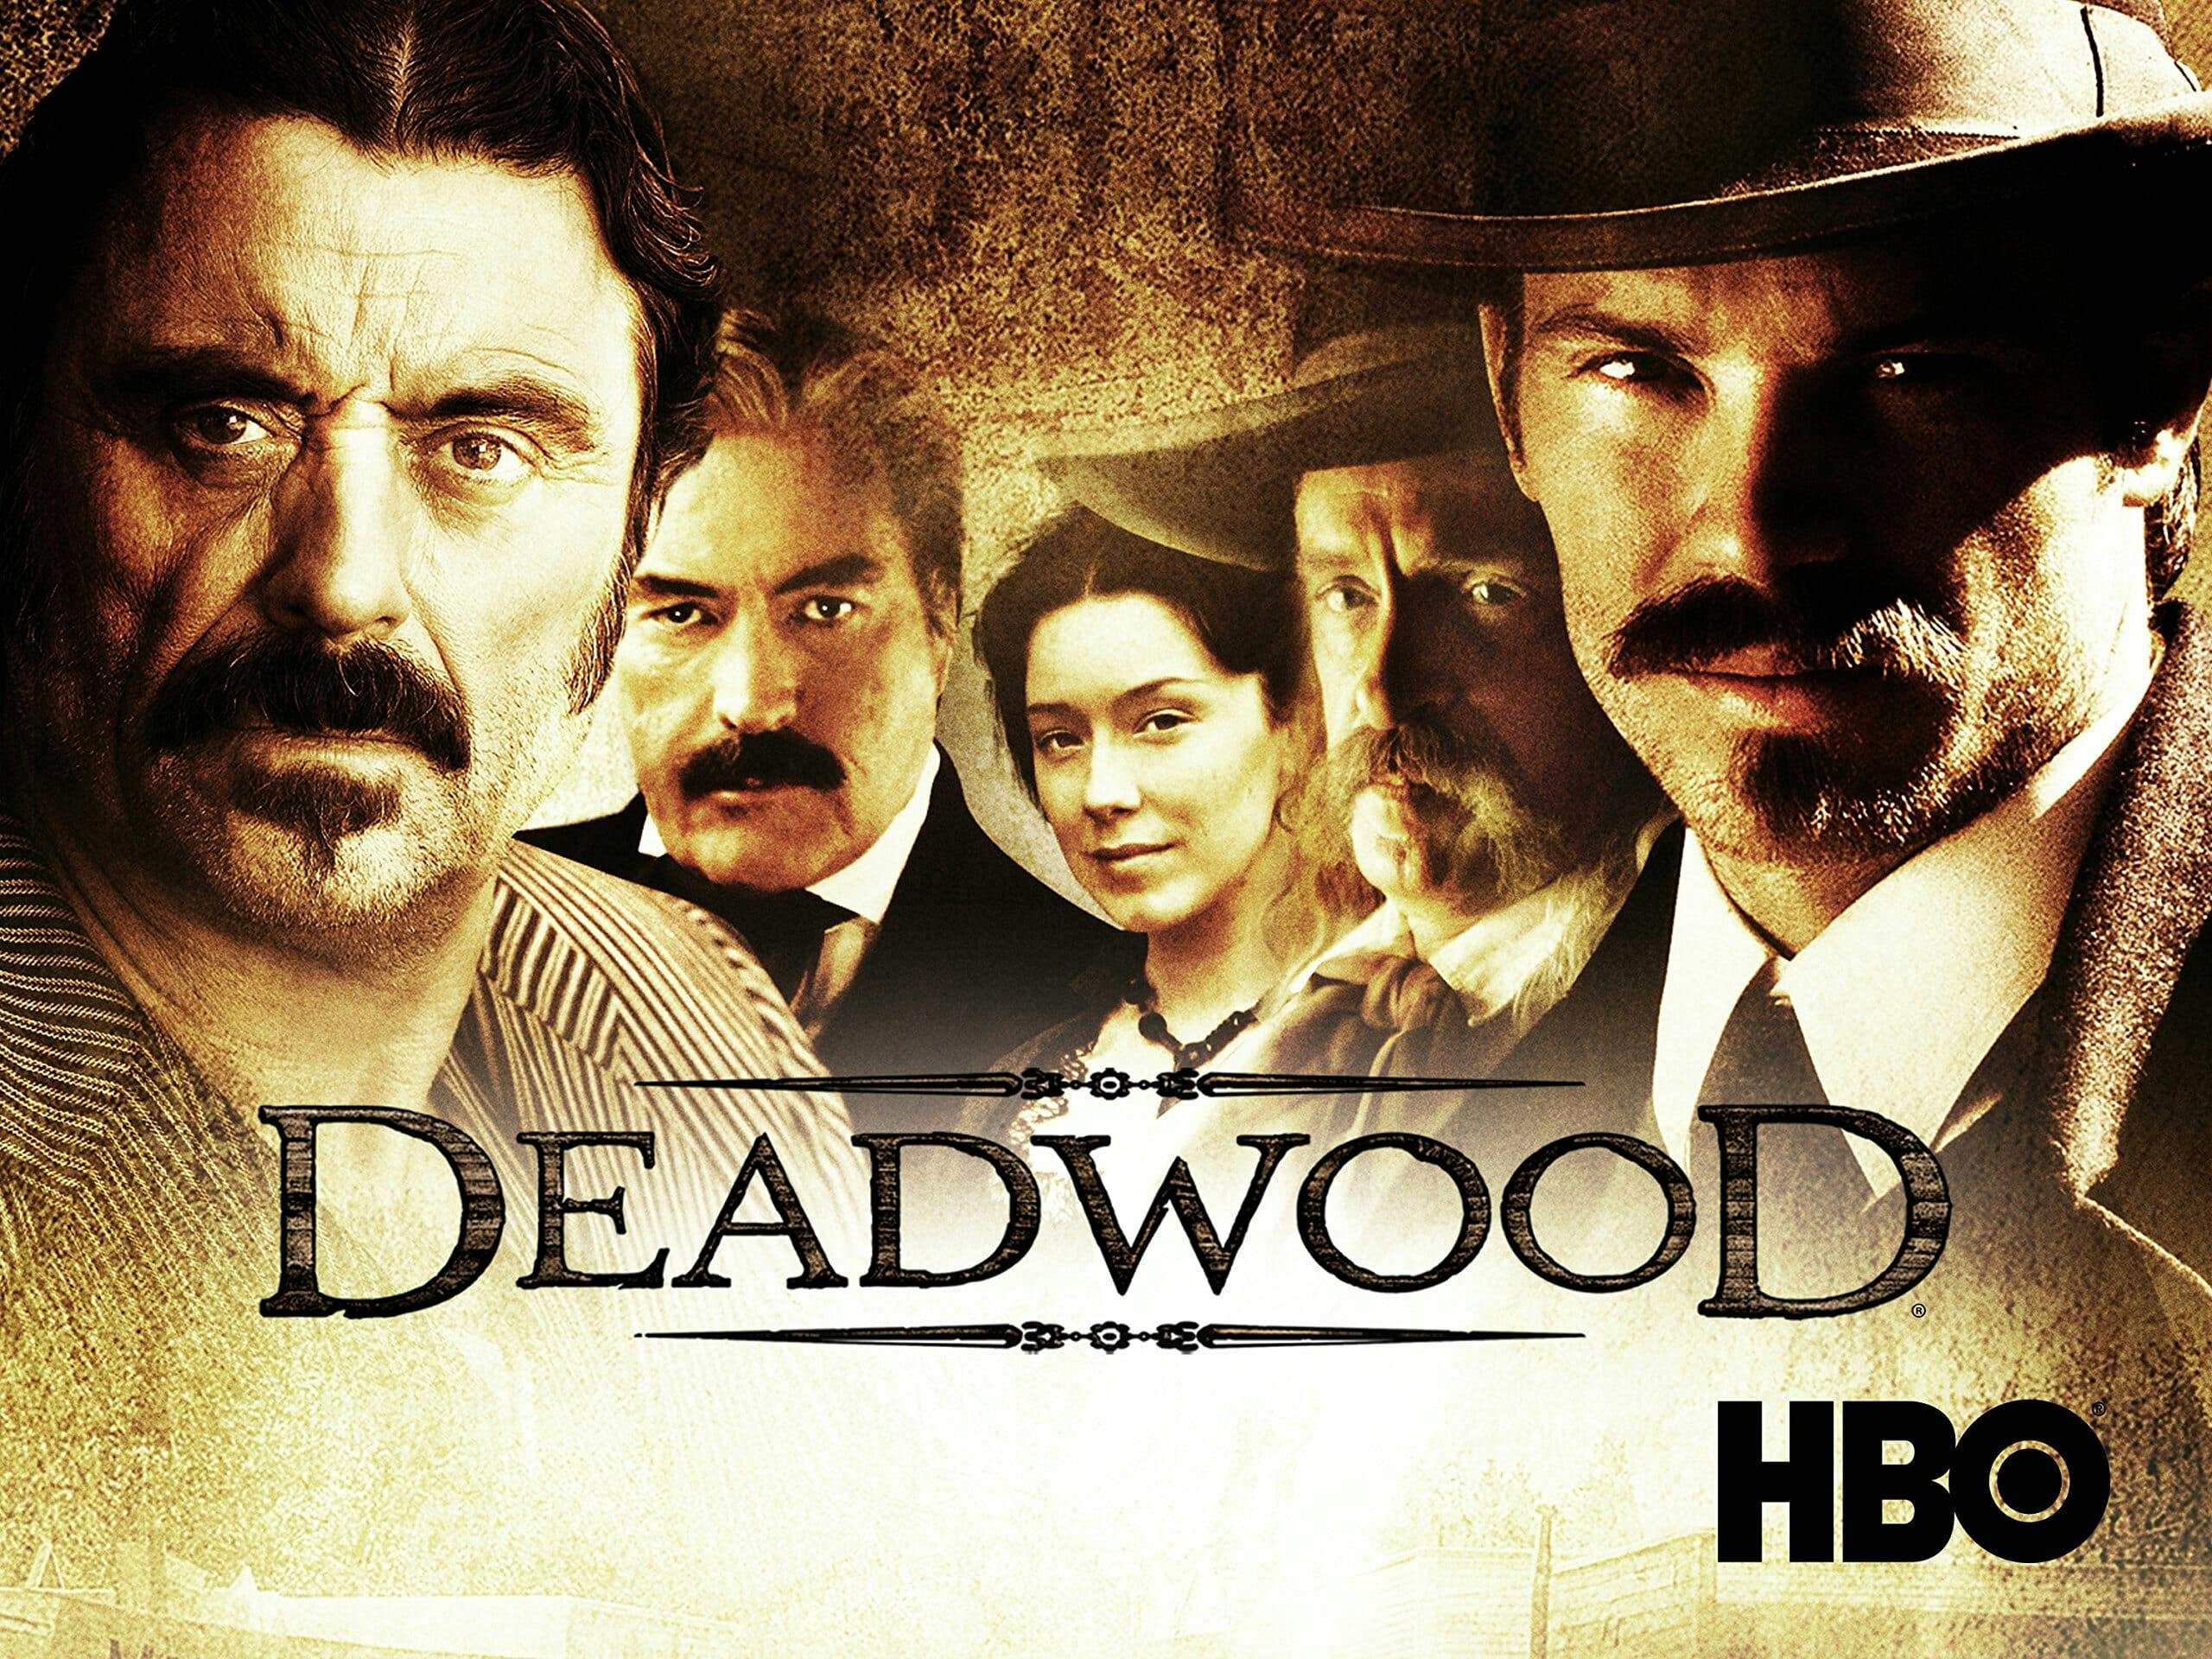 watch deadwood the movie online free on amazon